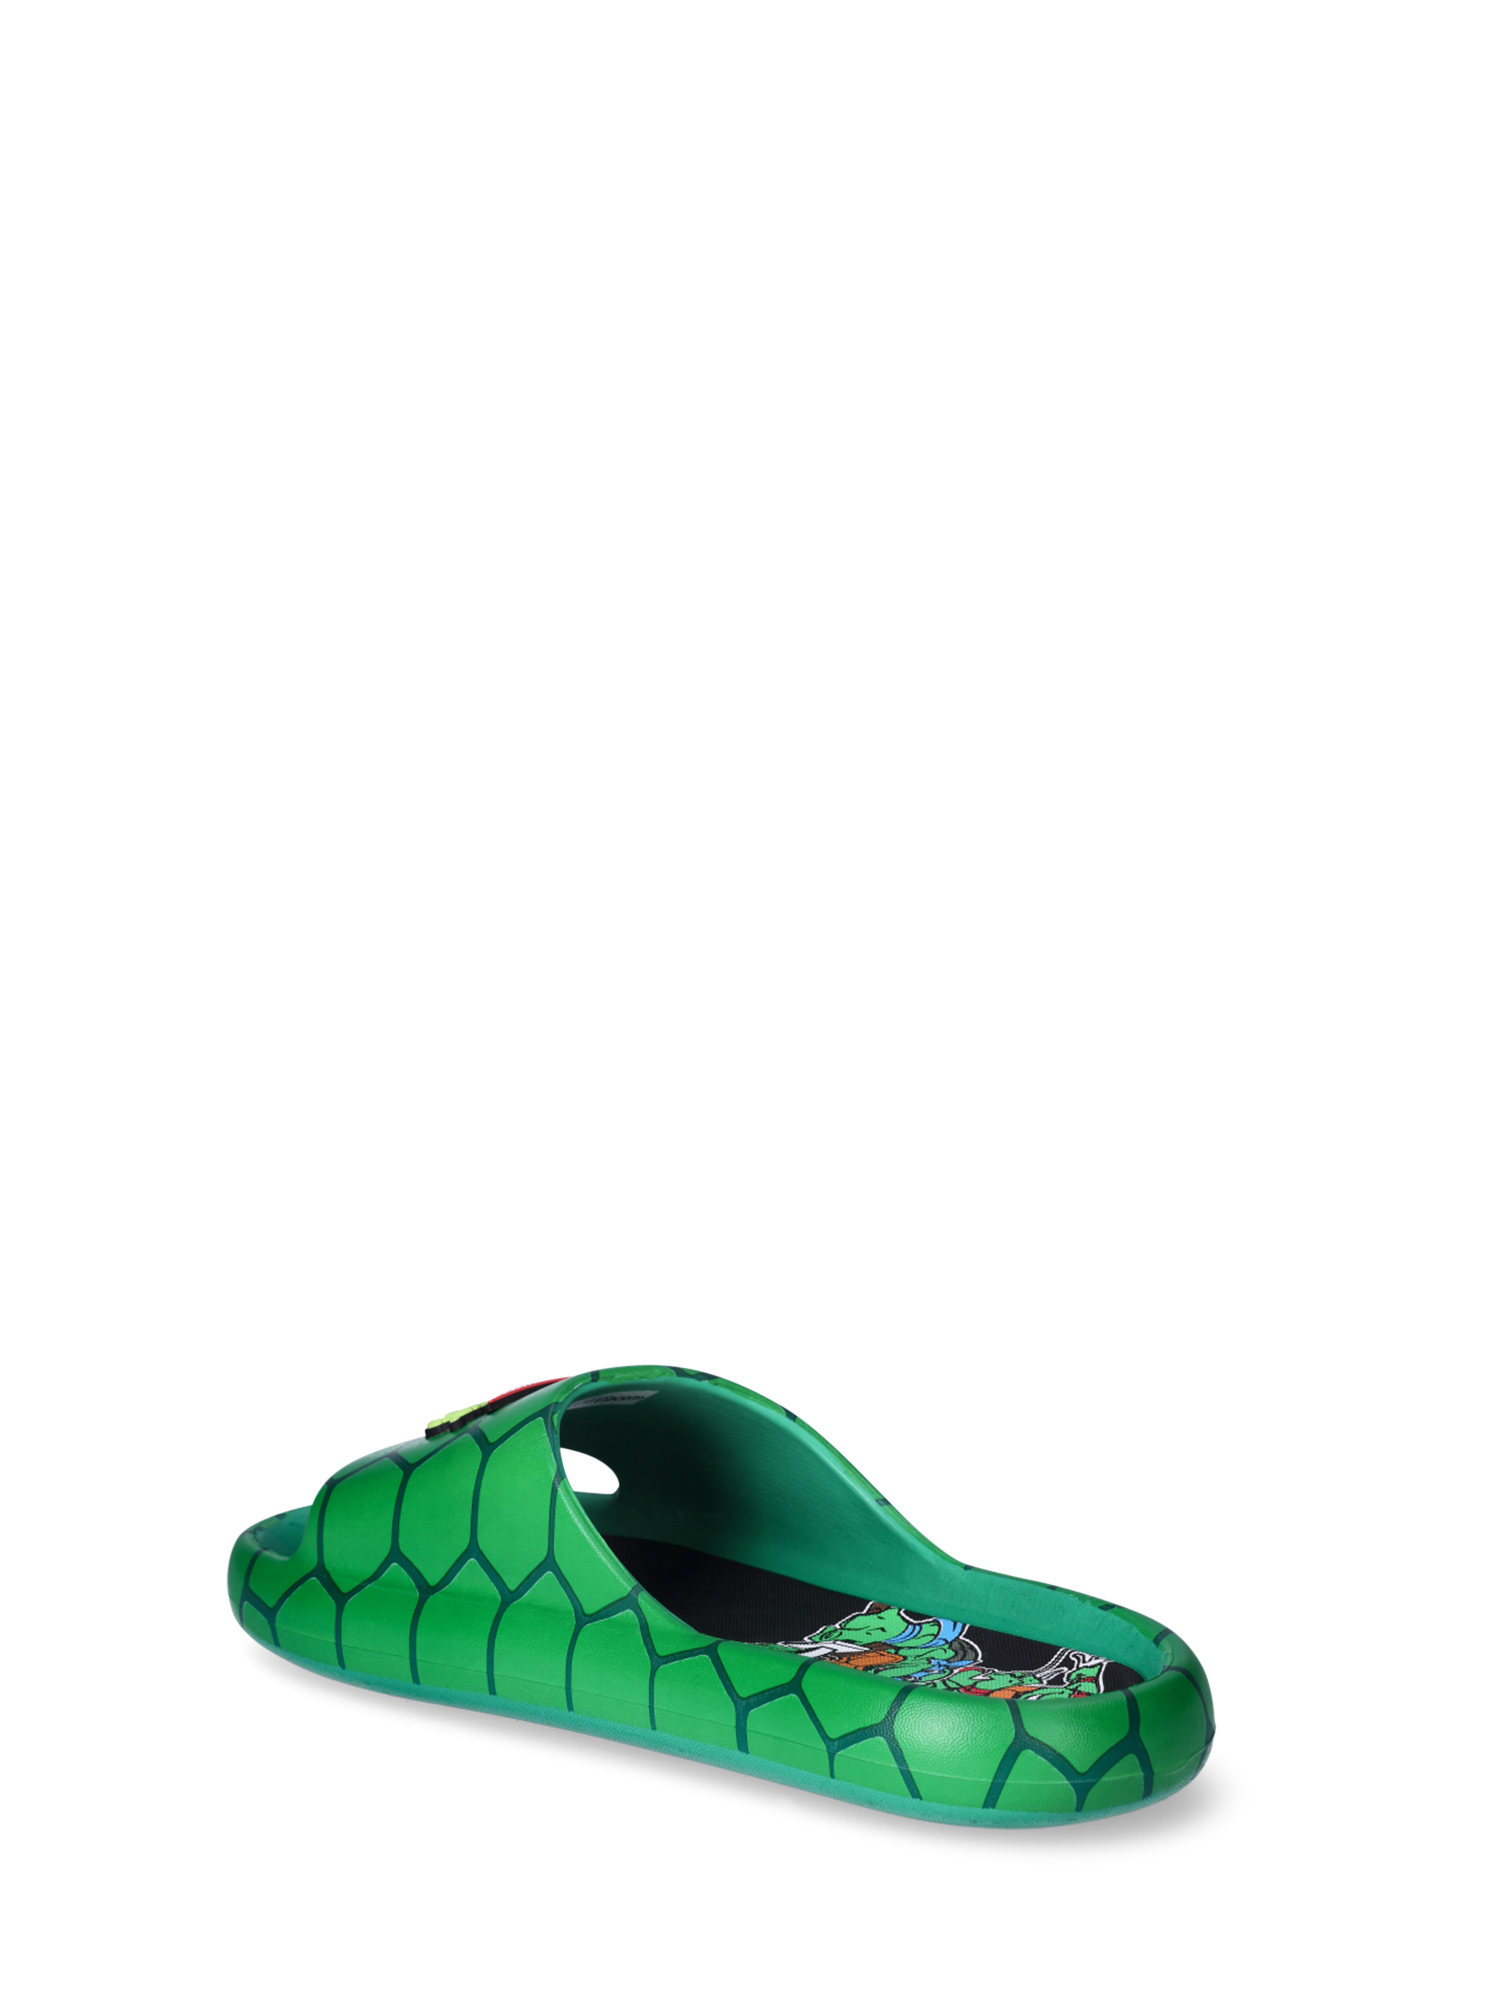 Teenage Mutant Ninja Turtles Logo Adult Slide Shoes - ShopNickU